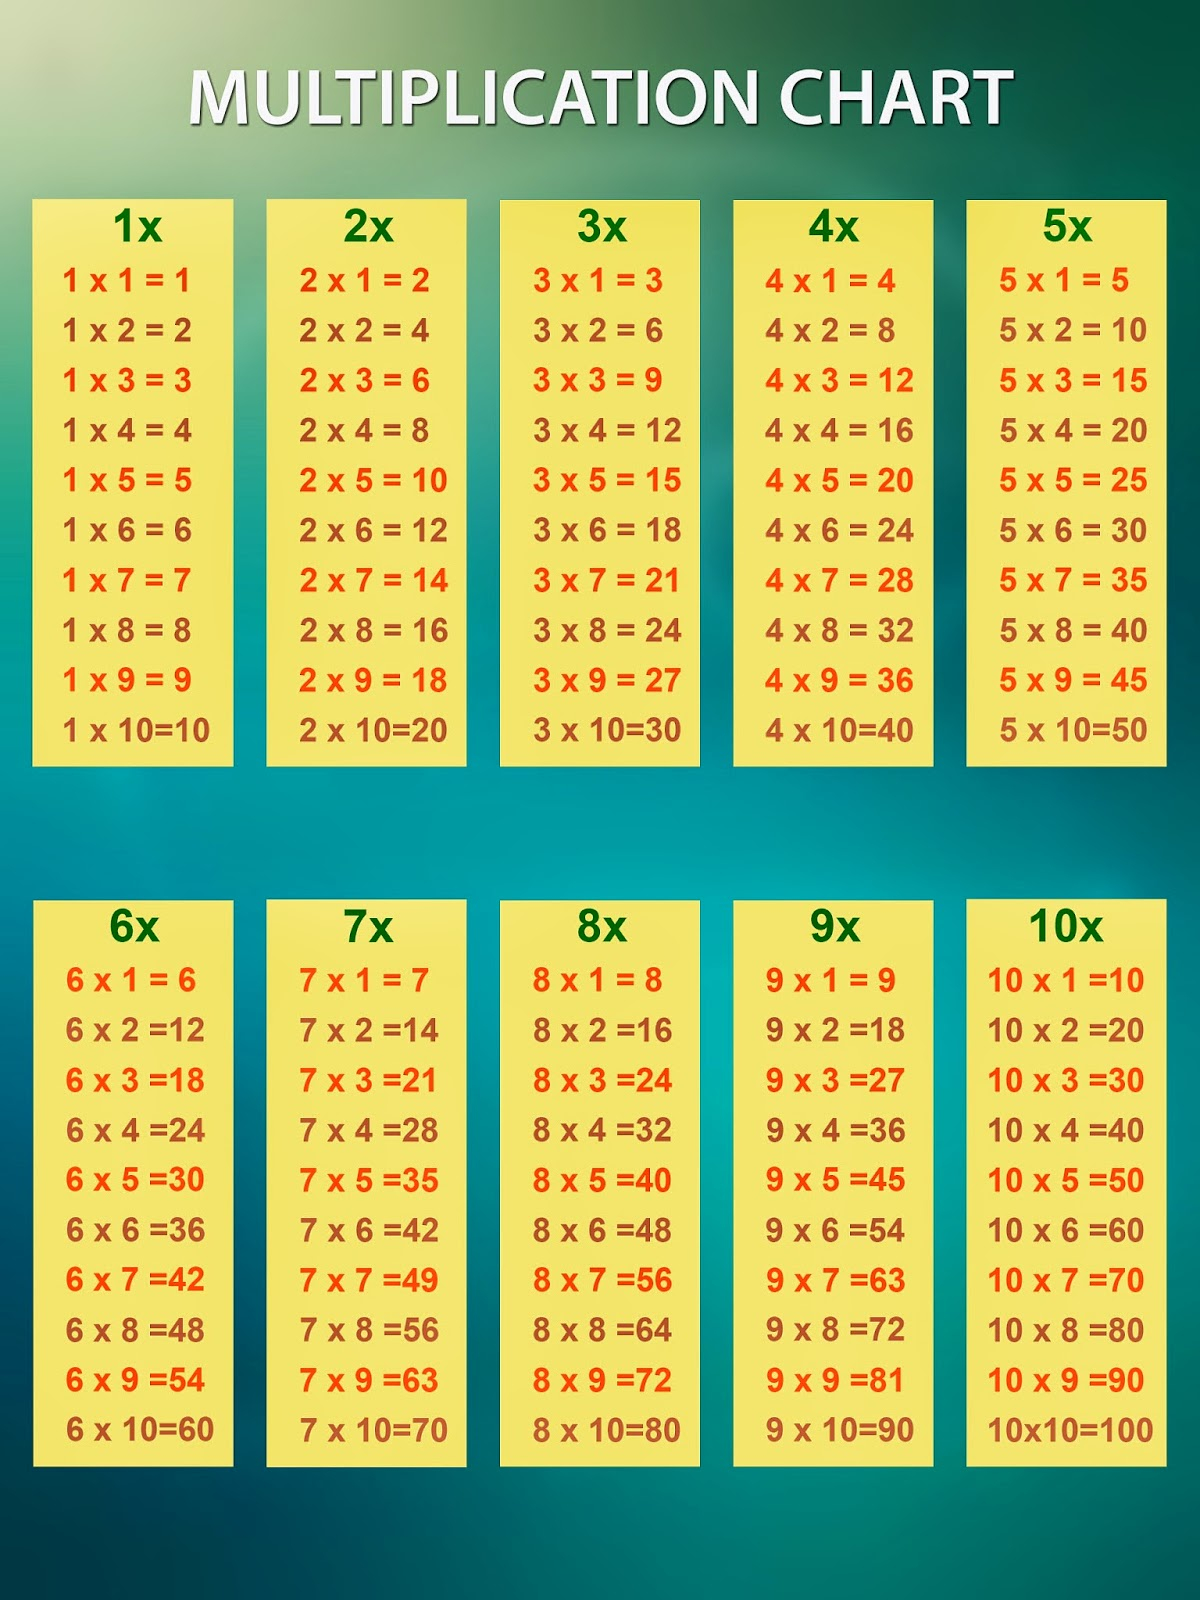 Multiplication Charts: Multiplication Chart